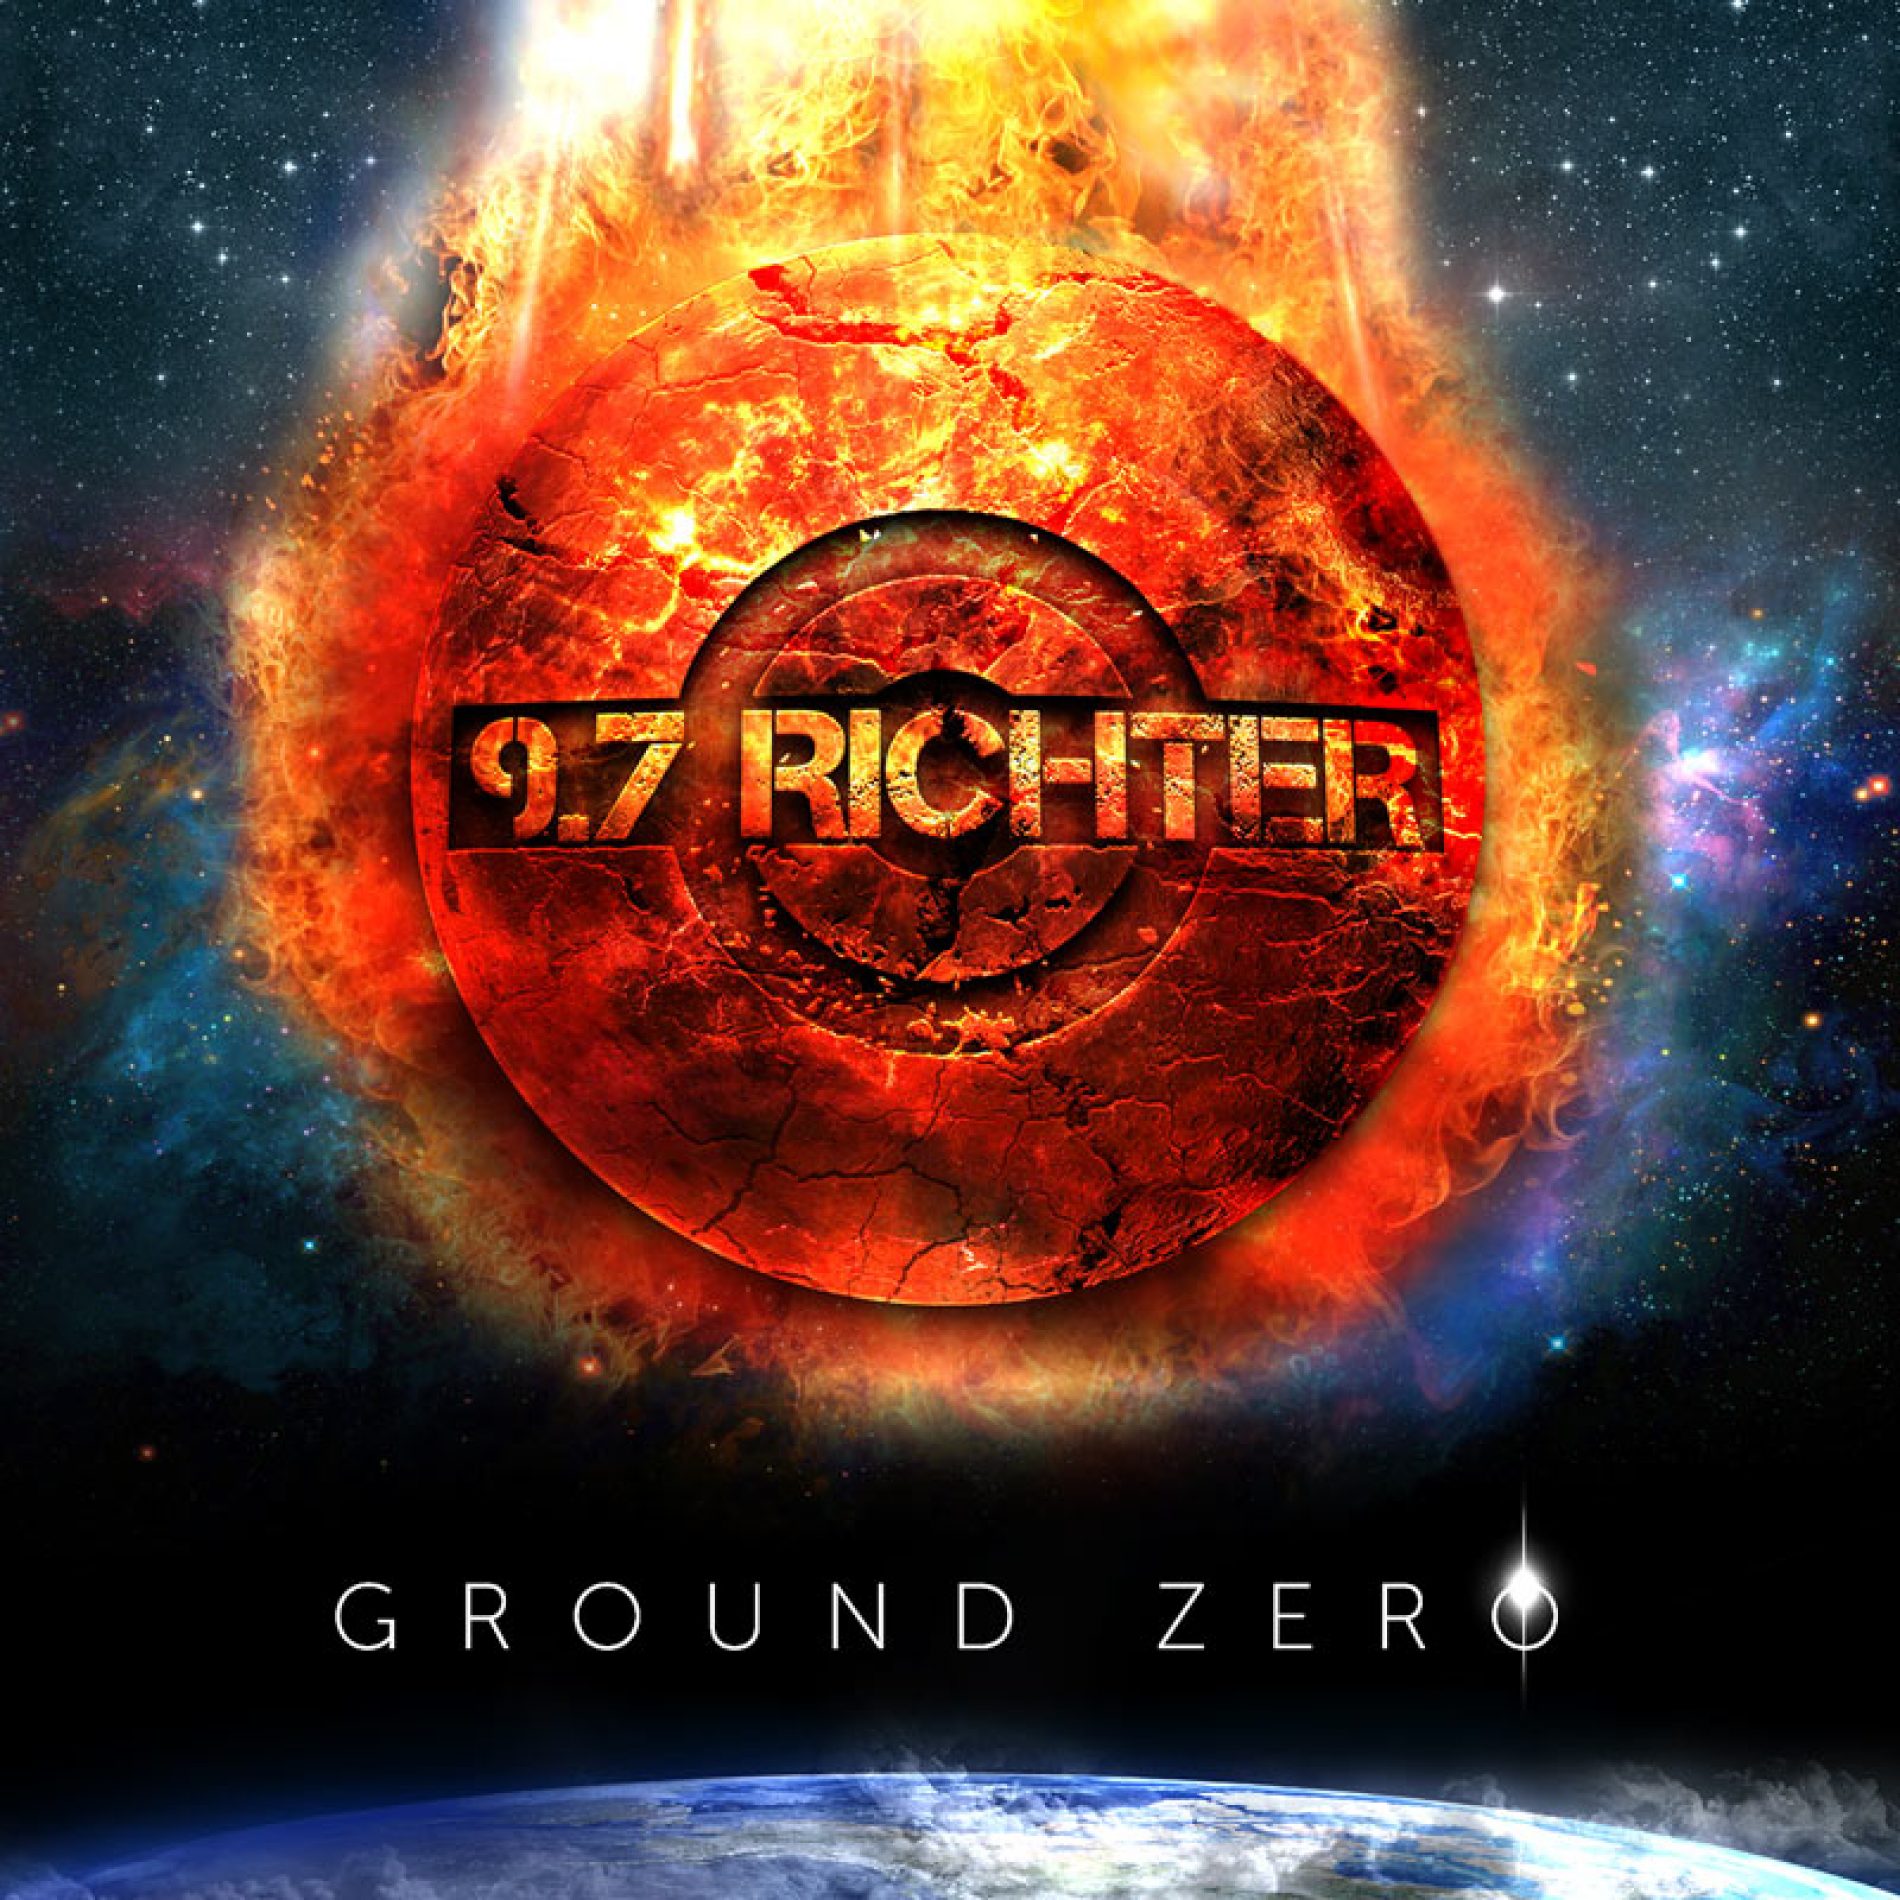 9.7 RICHTER – Ground Zero: Albumul anului 2014